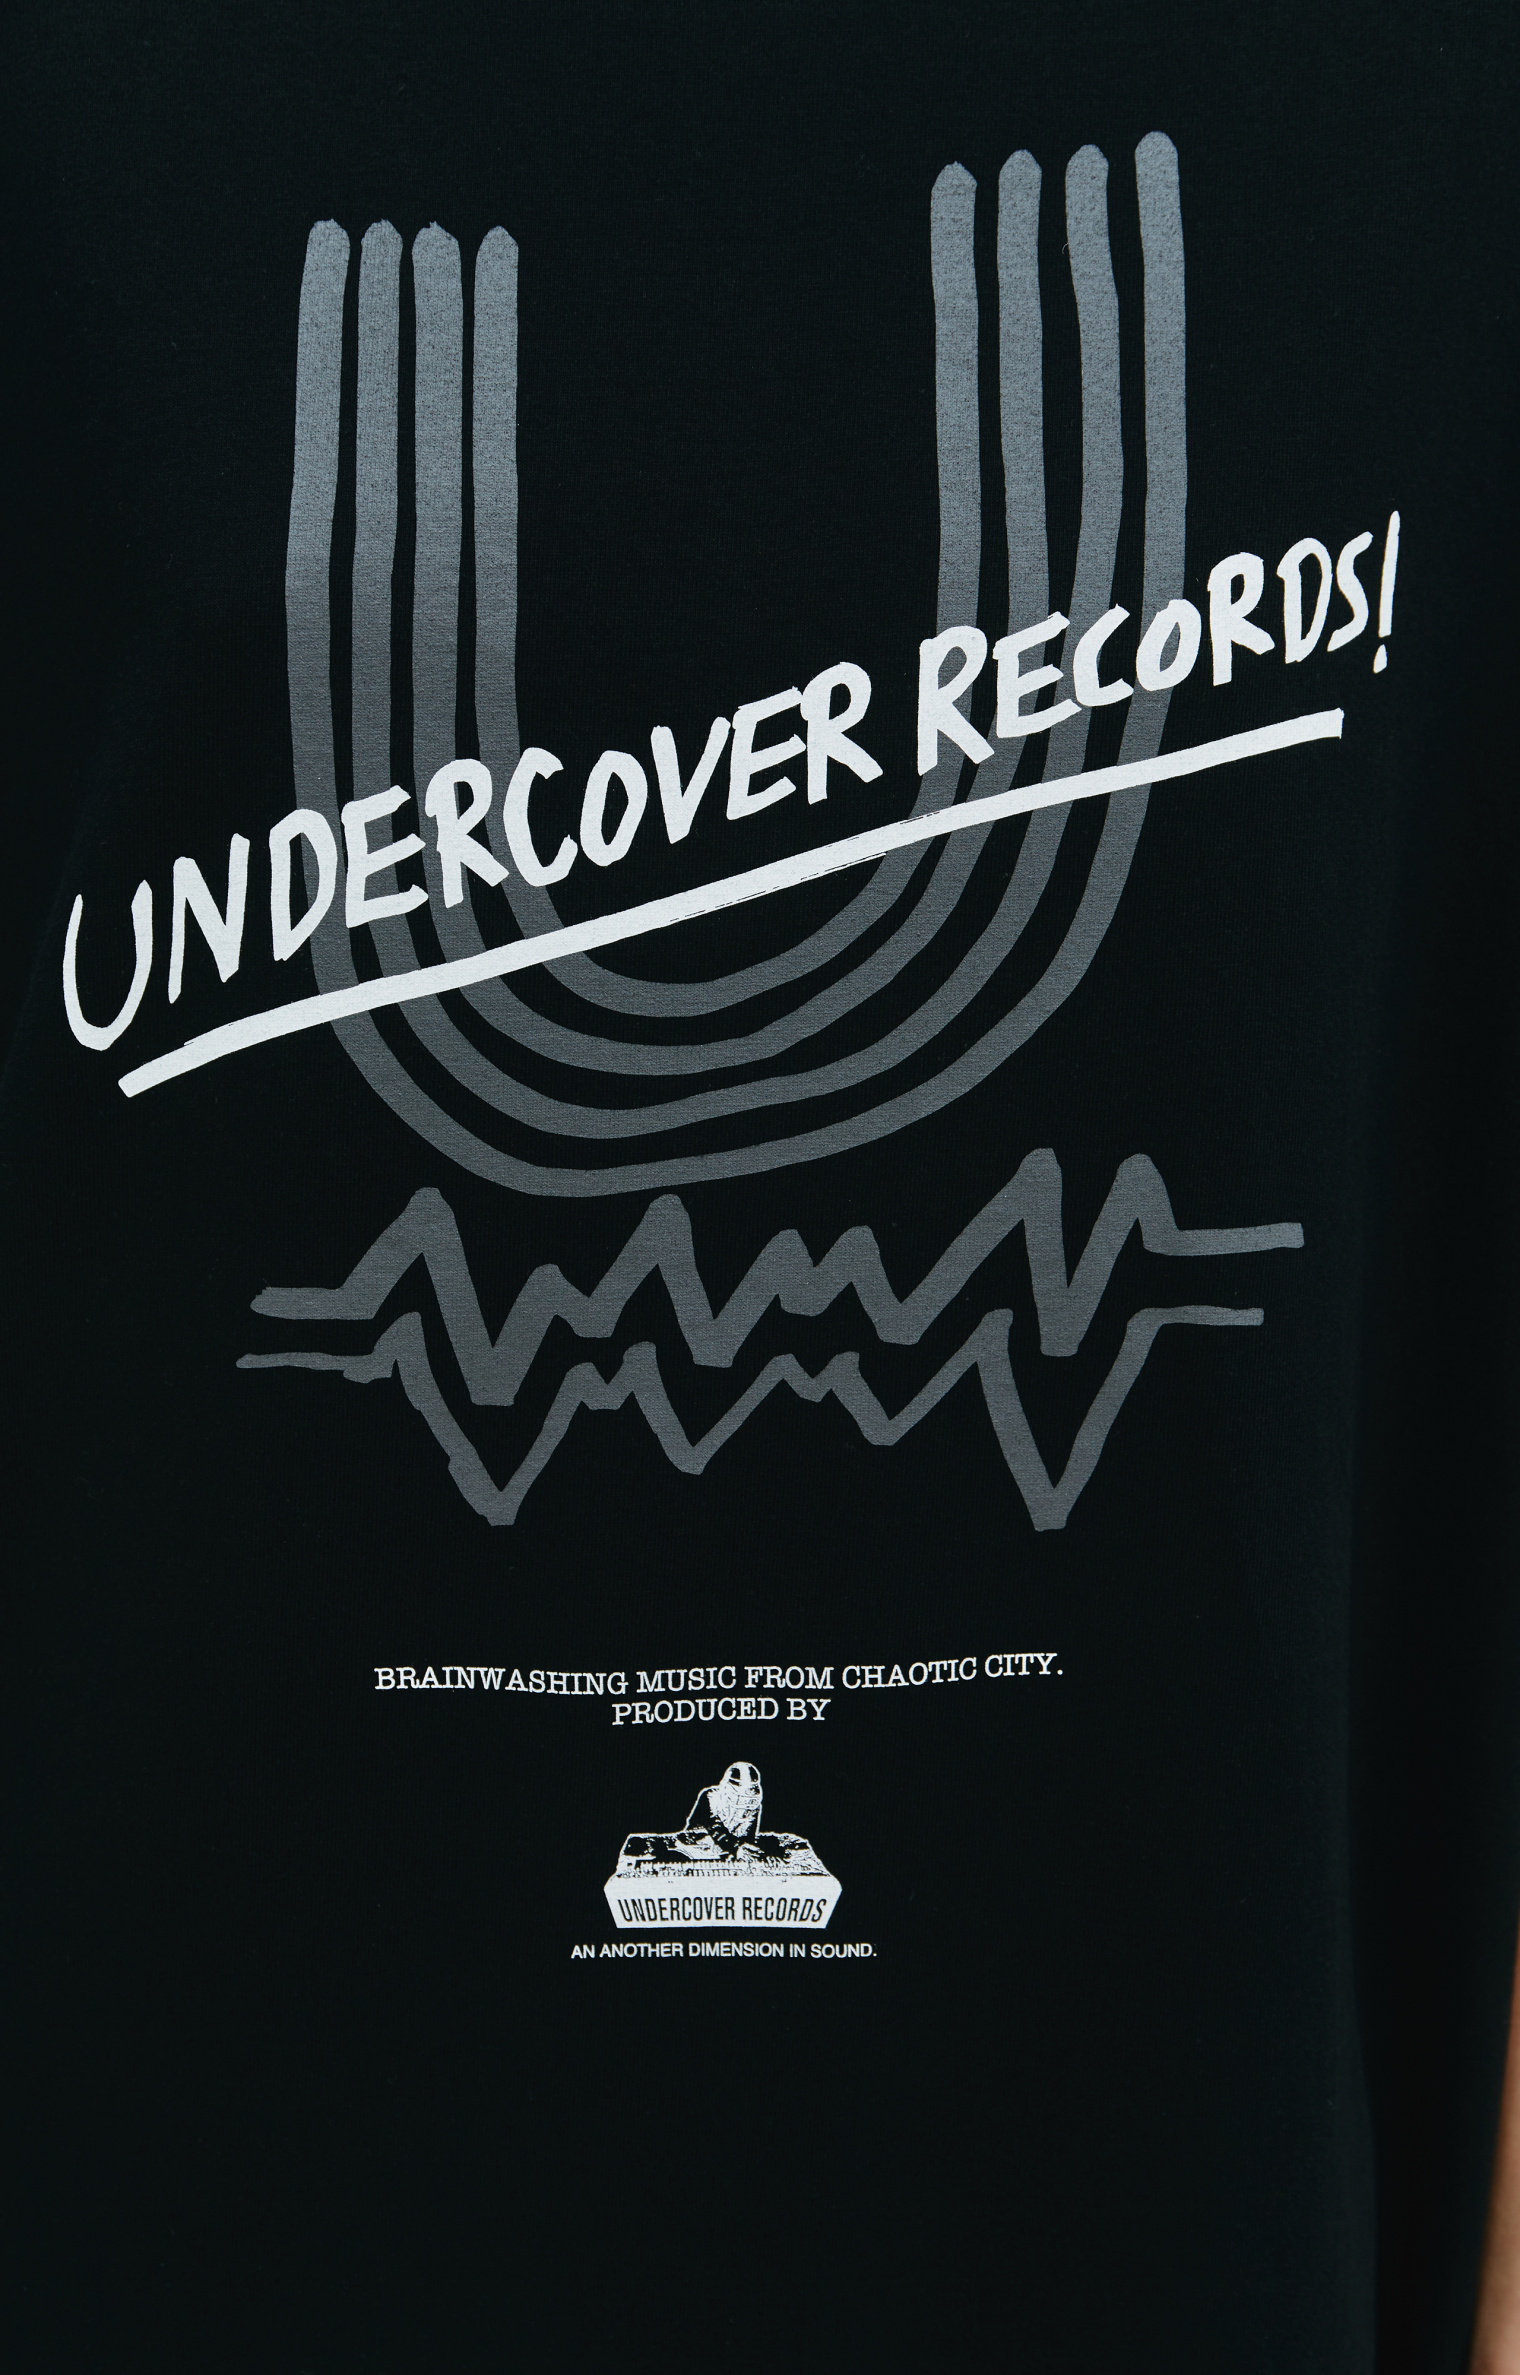 Undercover Черная футболка с принтом Undercover Records